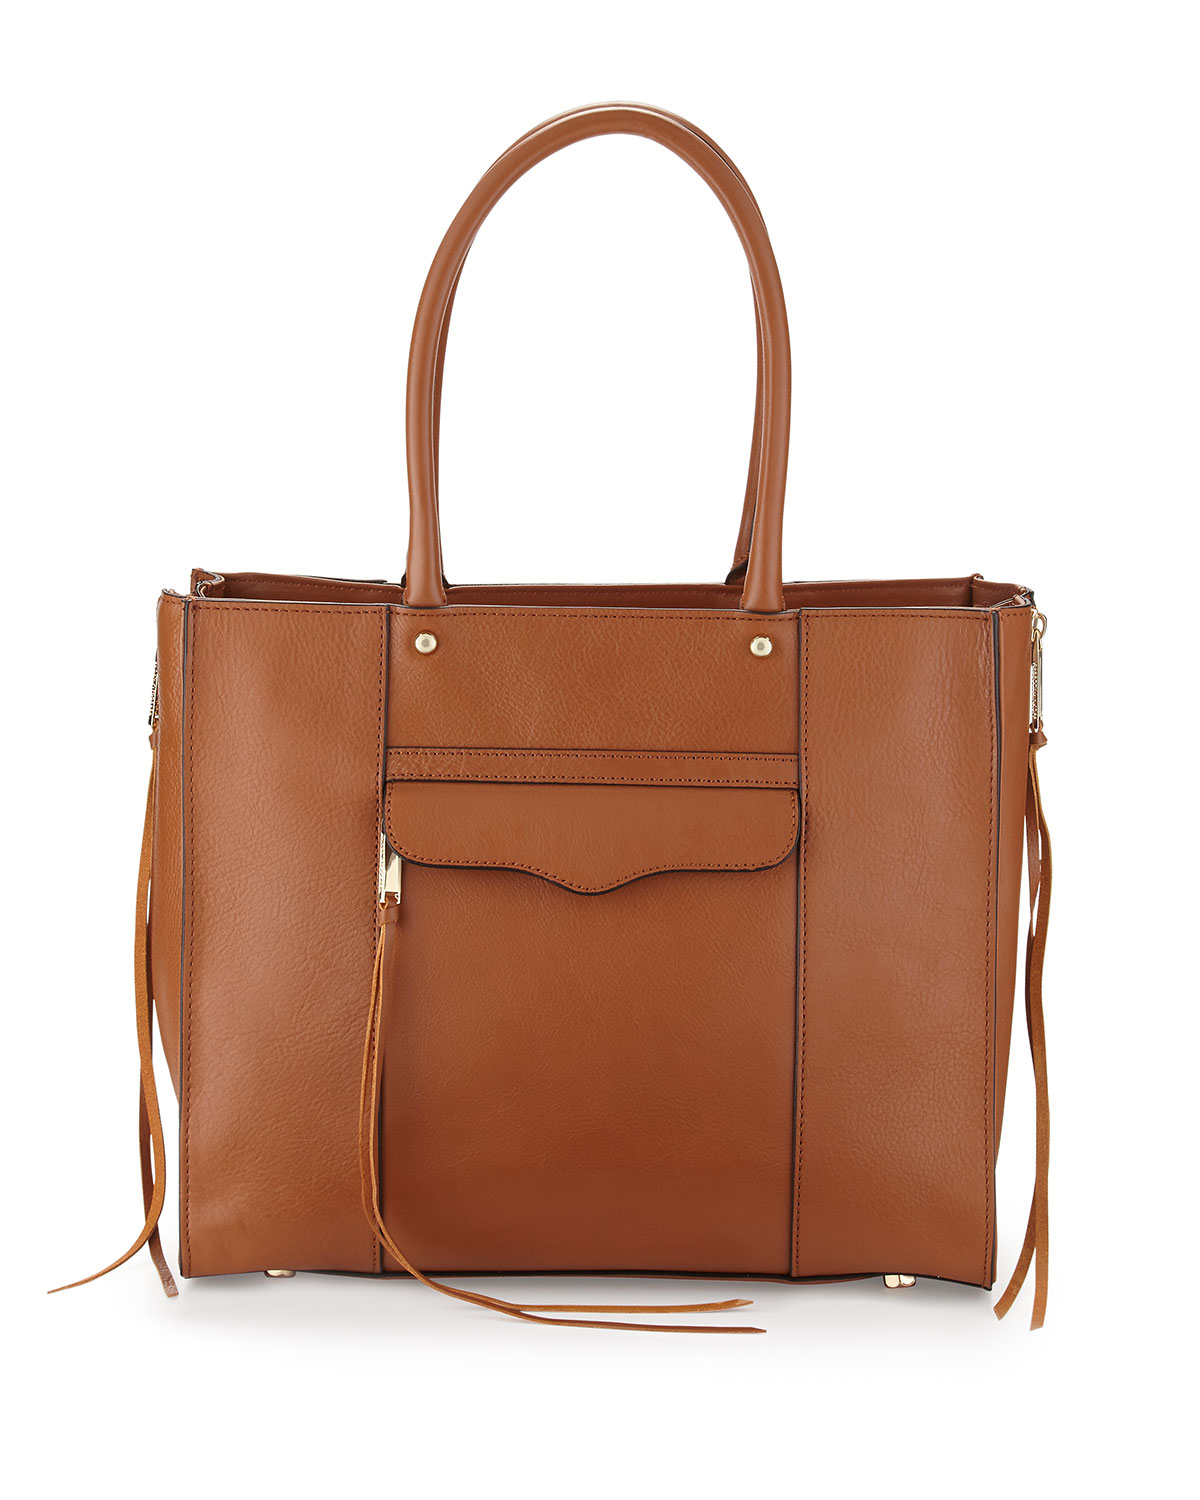 Lyst - Rebecca Minkoff Mab Medium Leather Tote Bag in Brown